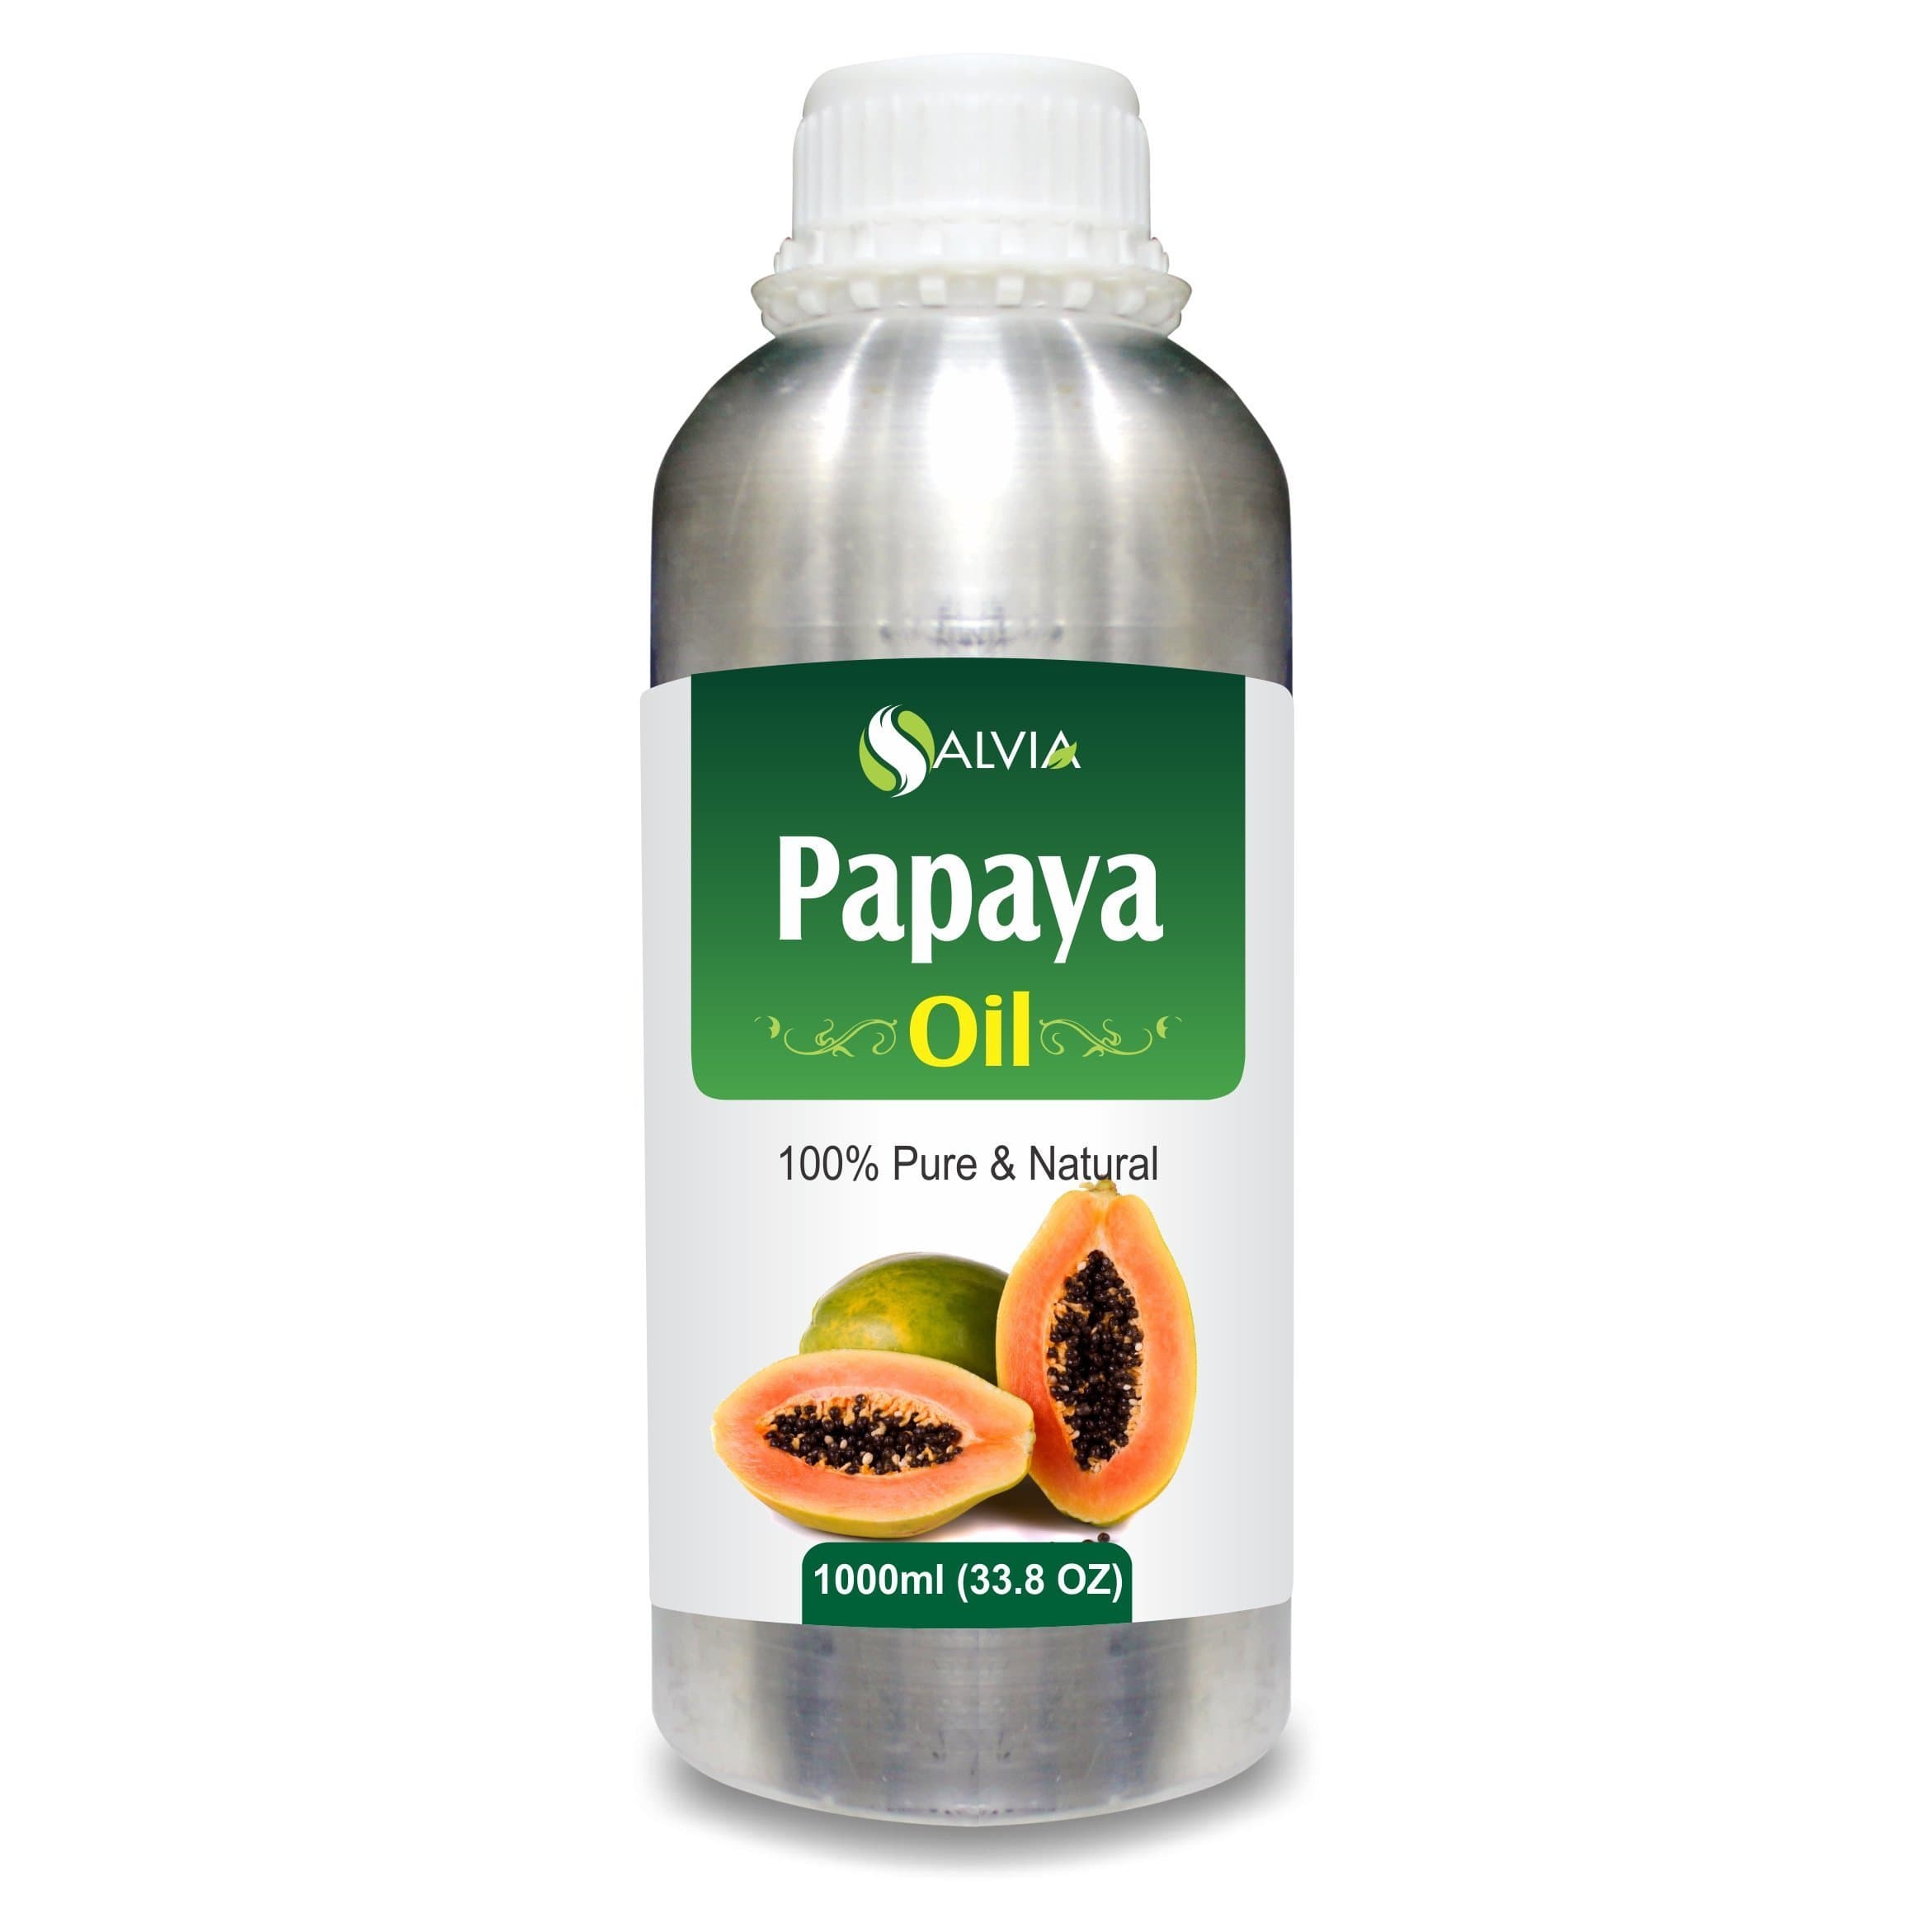  papaya oil good for the face